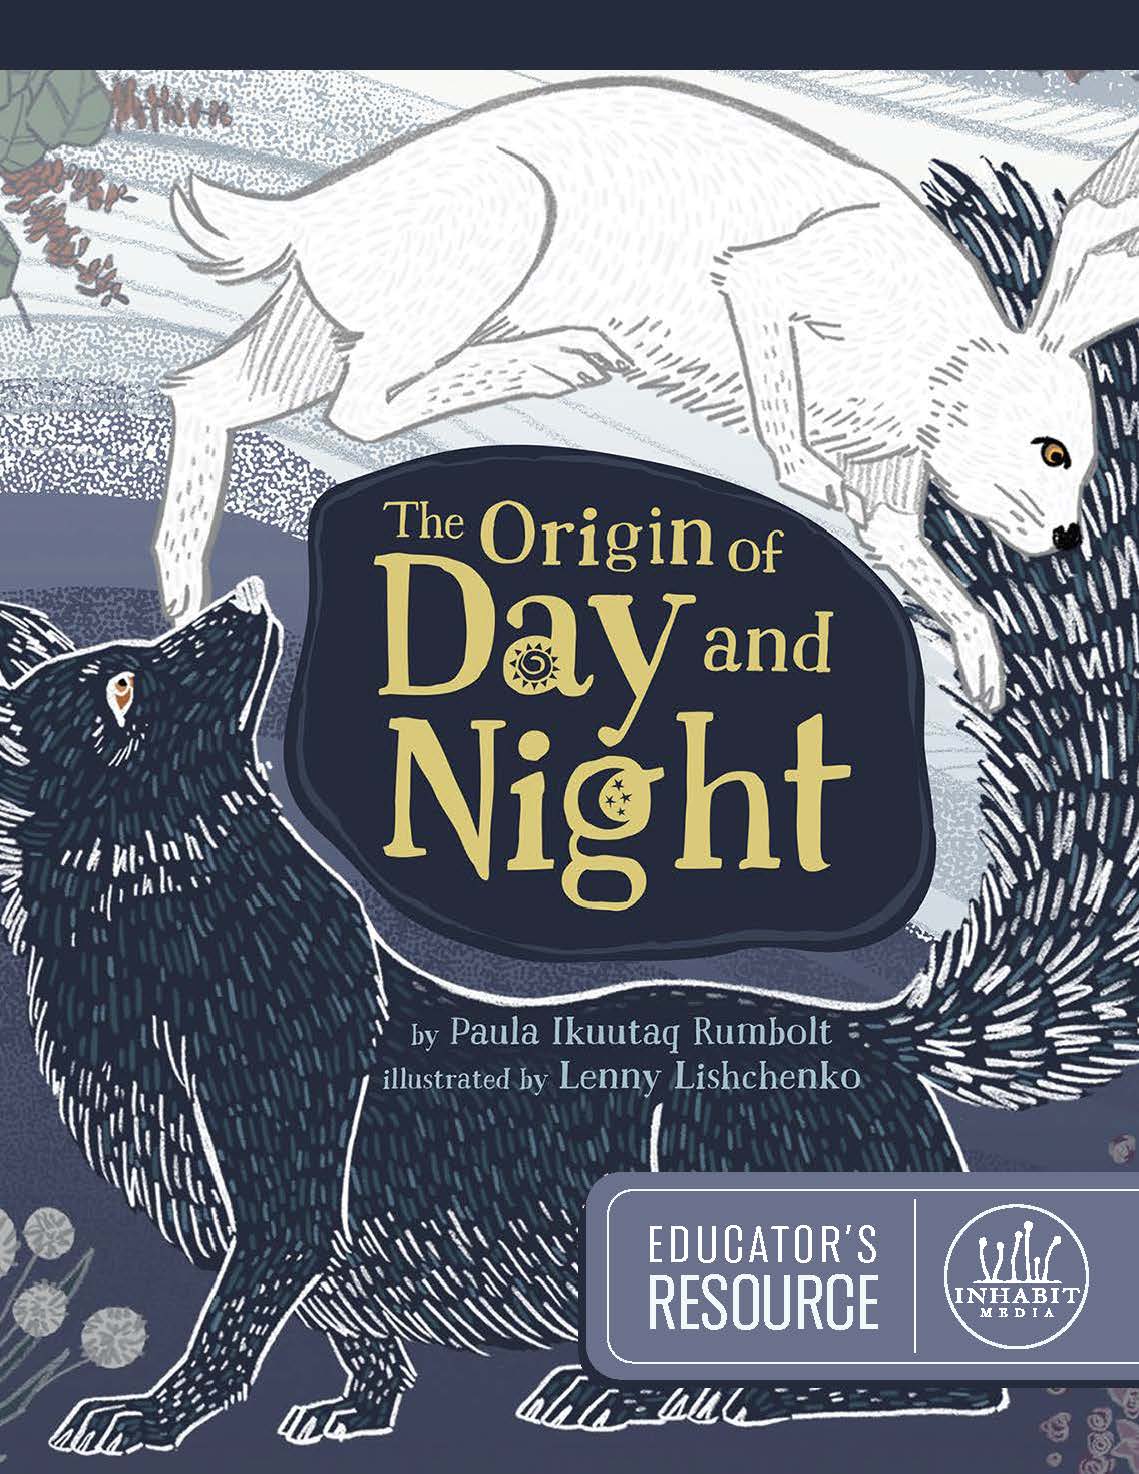 The Origin of Day and Night Educator's Resource